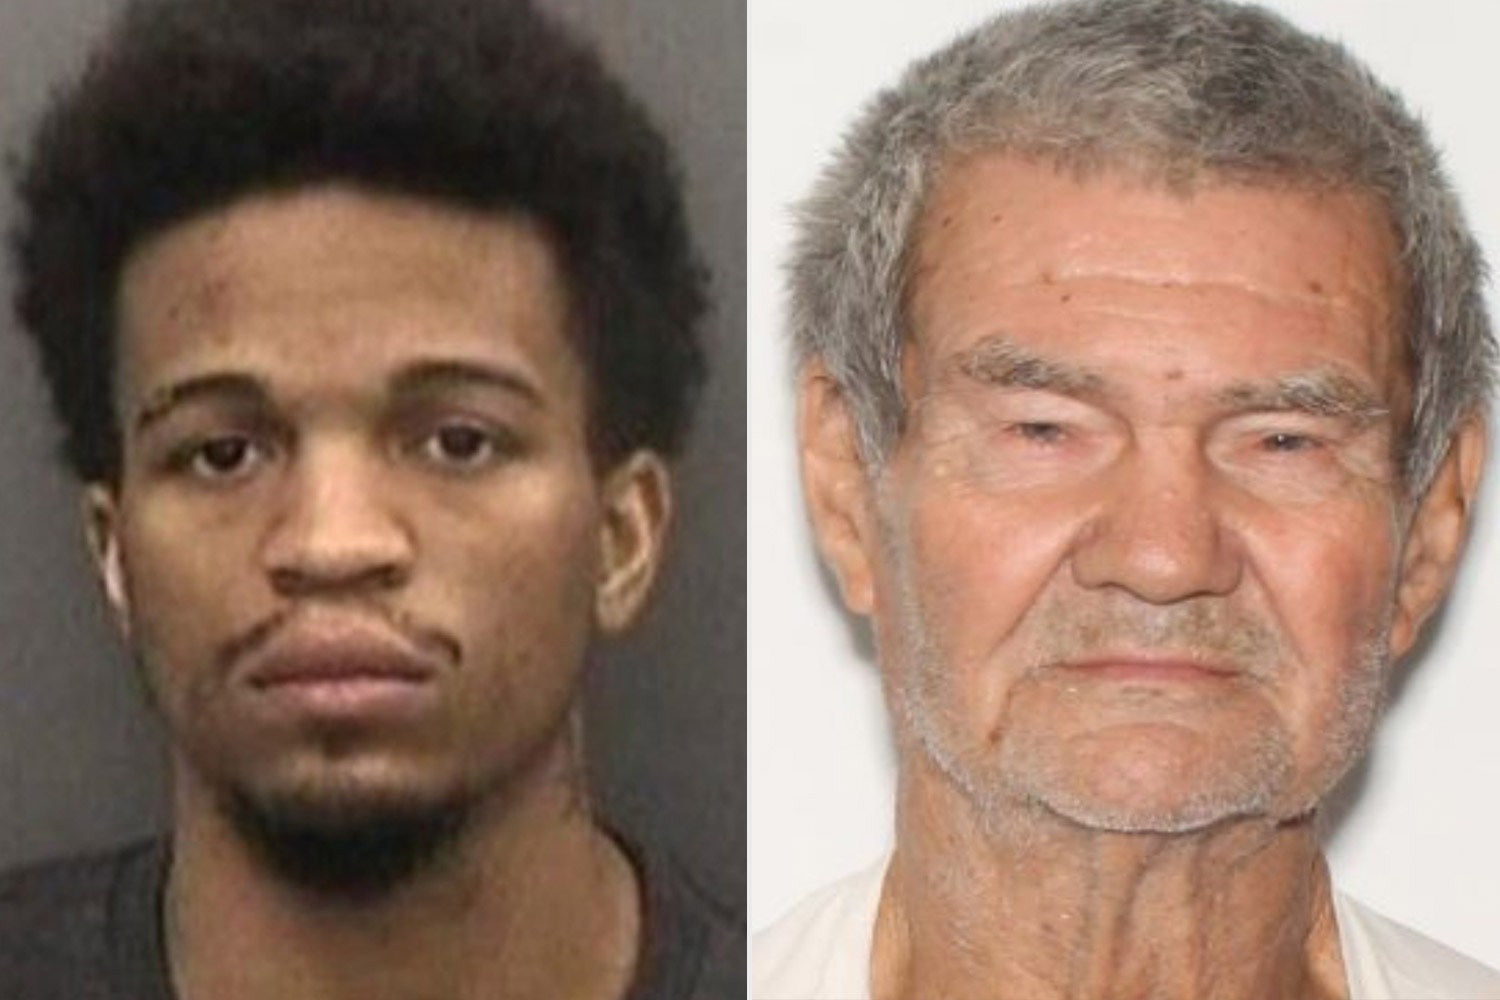 Black Florida Man Gets Light Sentence For Fatally Punching Racist White Man